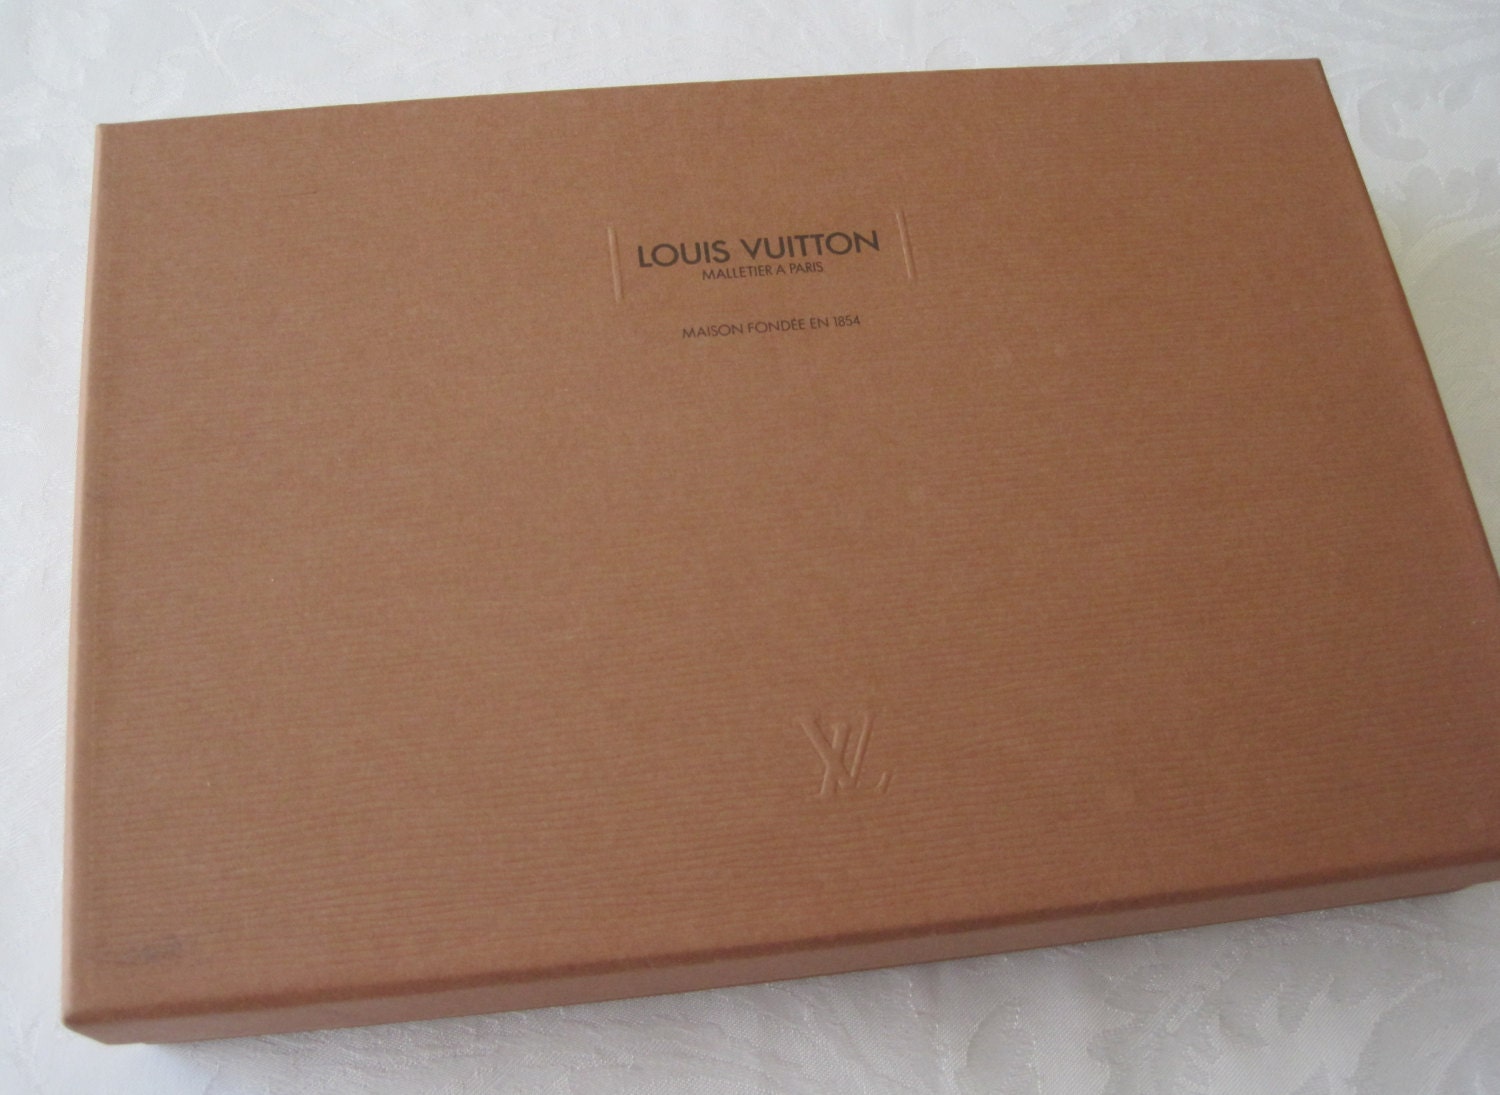 Maison Fondee En 1854 Louis Vuitton – Ventana Blog